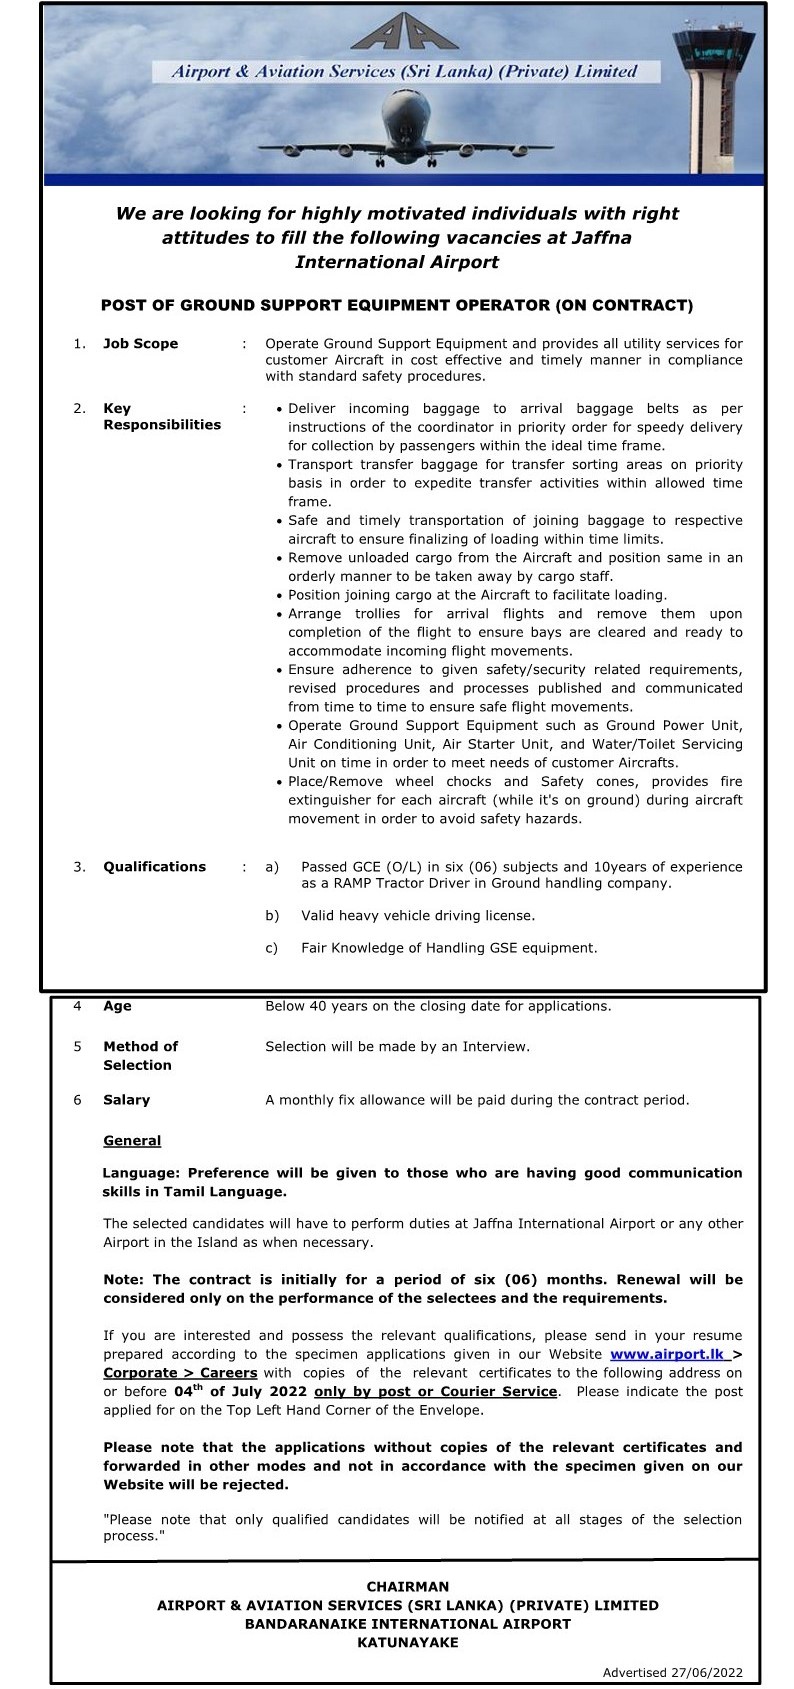 Ground Support Equipment Operator - Jaffna International Airport Jobs Vacancies Details, Application